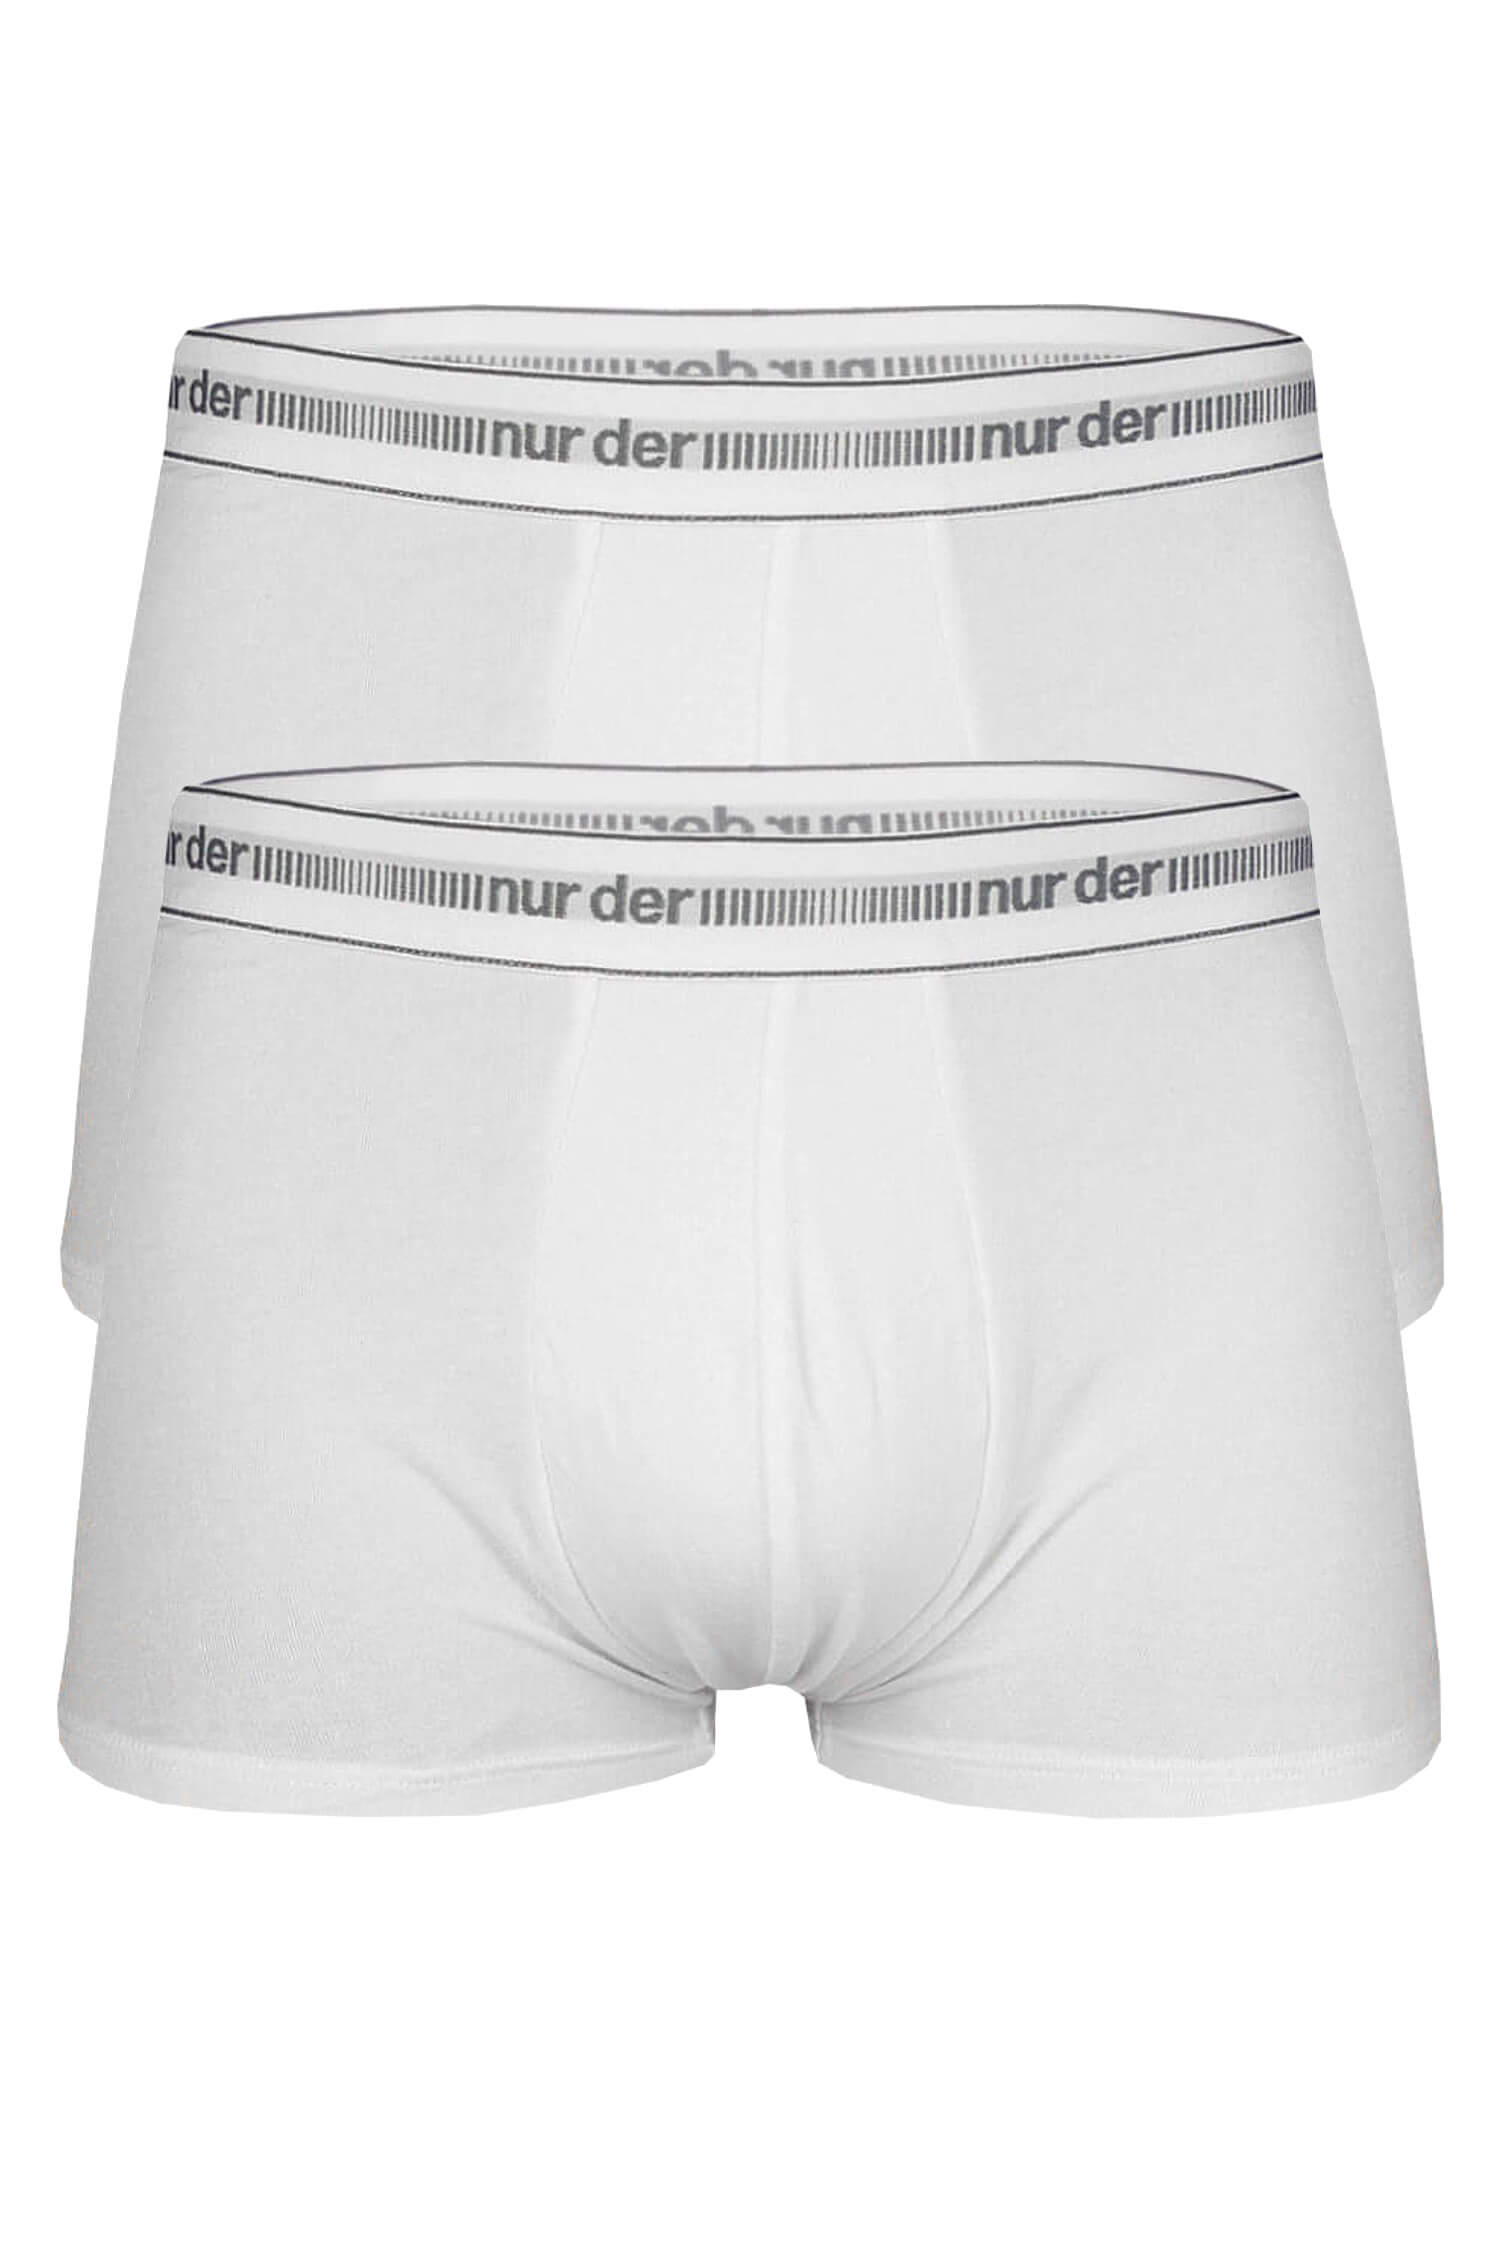 Nur Der Top bavlněné boxerky - 2 ks M bílá